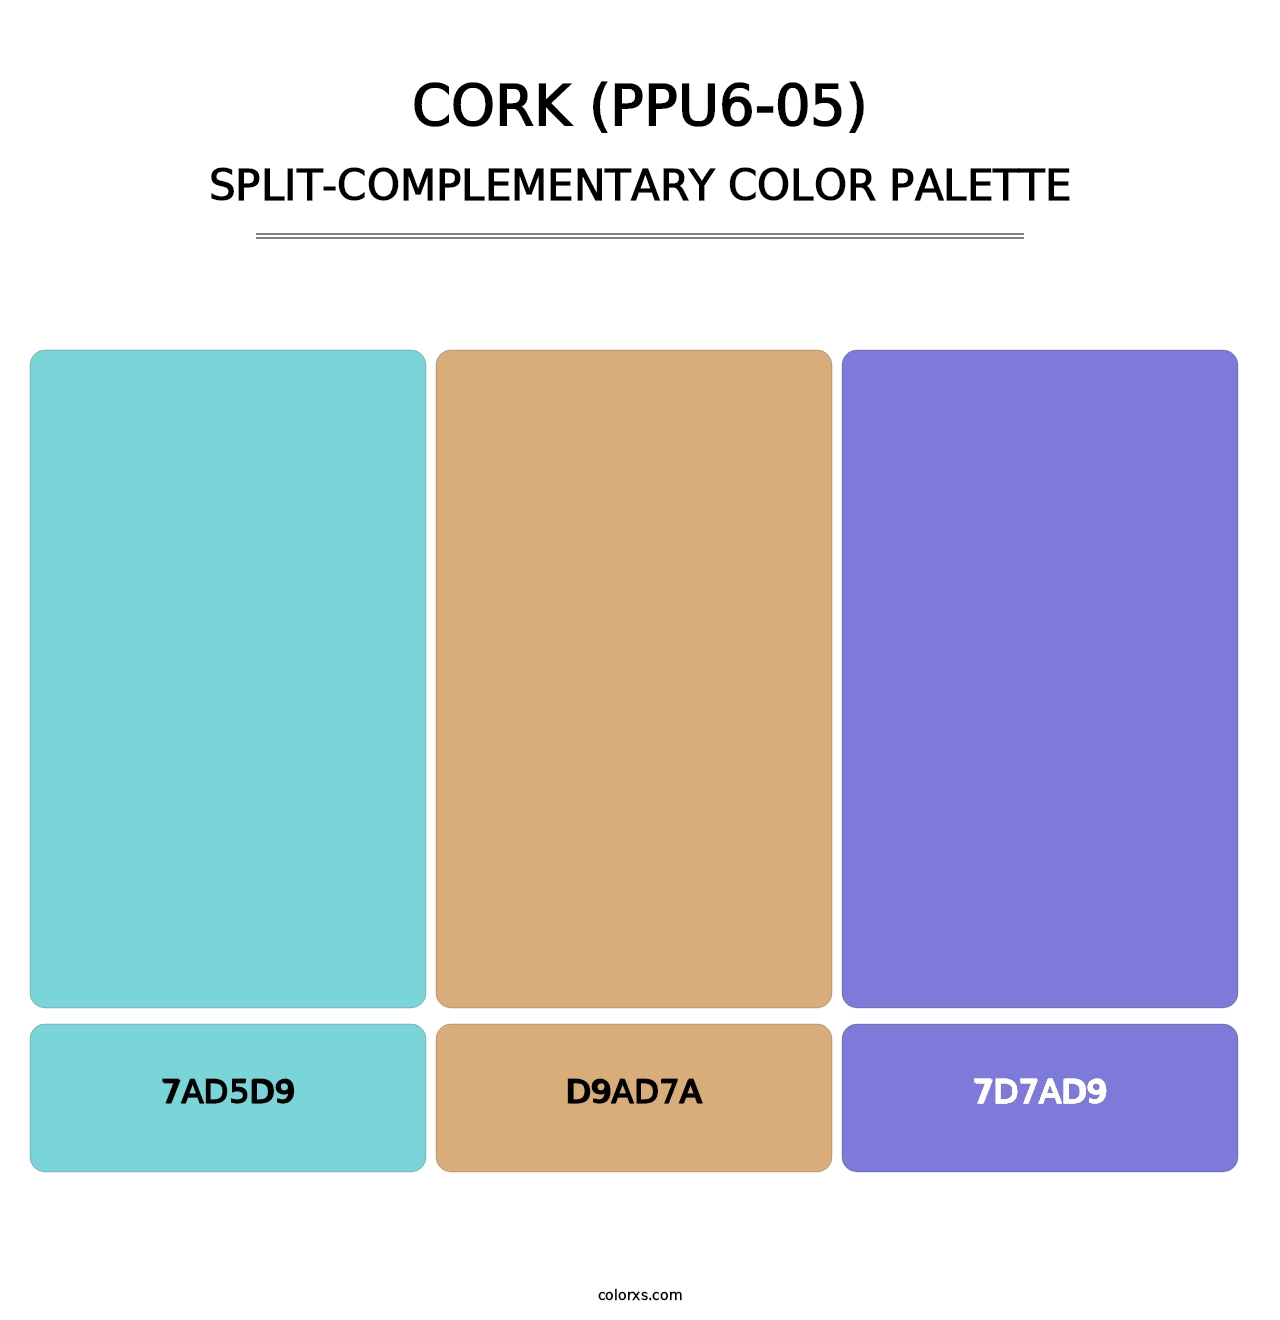 Cork (PPU6-05) - Split-Complementary Color Palette